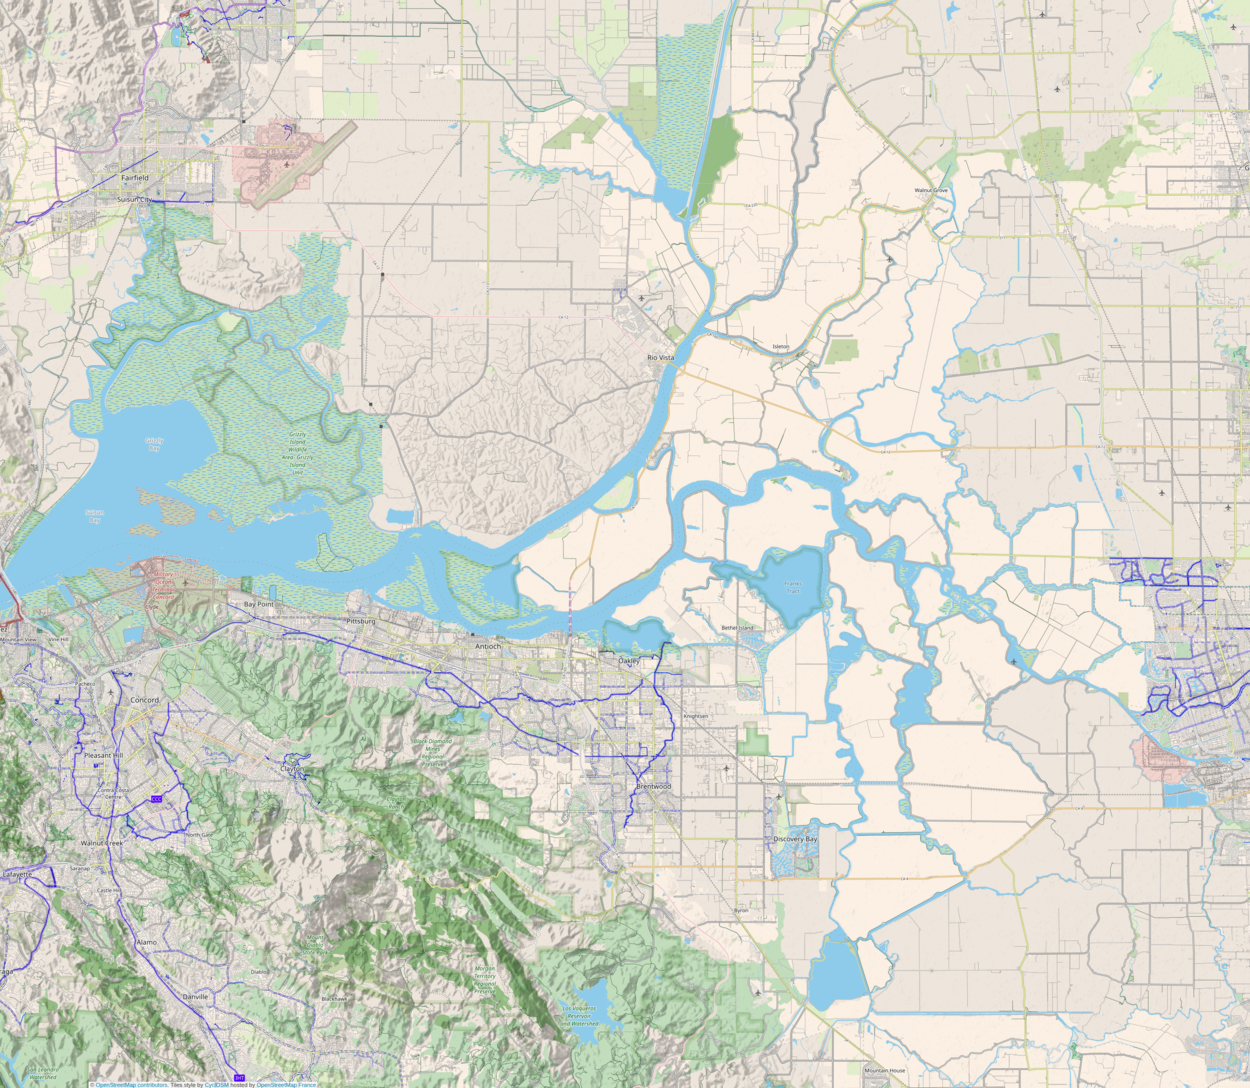 JPxG is located in Sacramento-San Joaquin River Delta